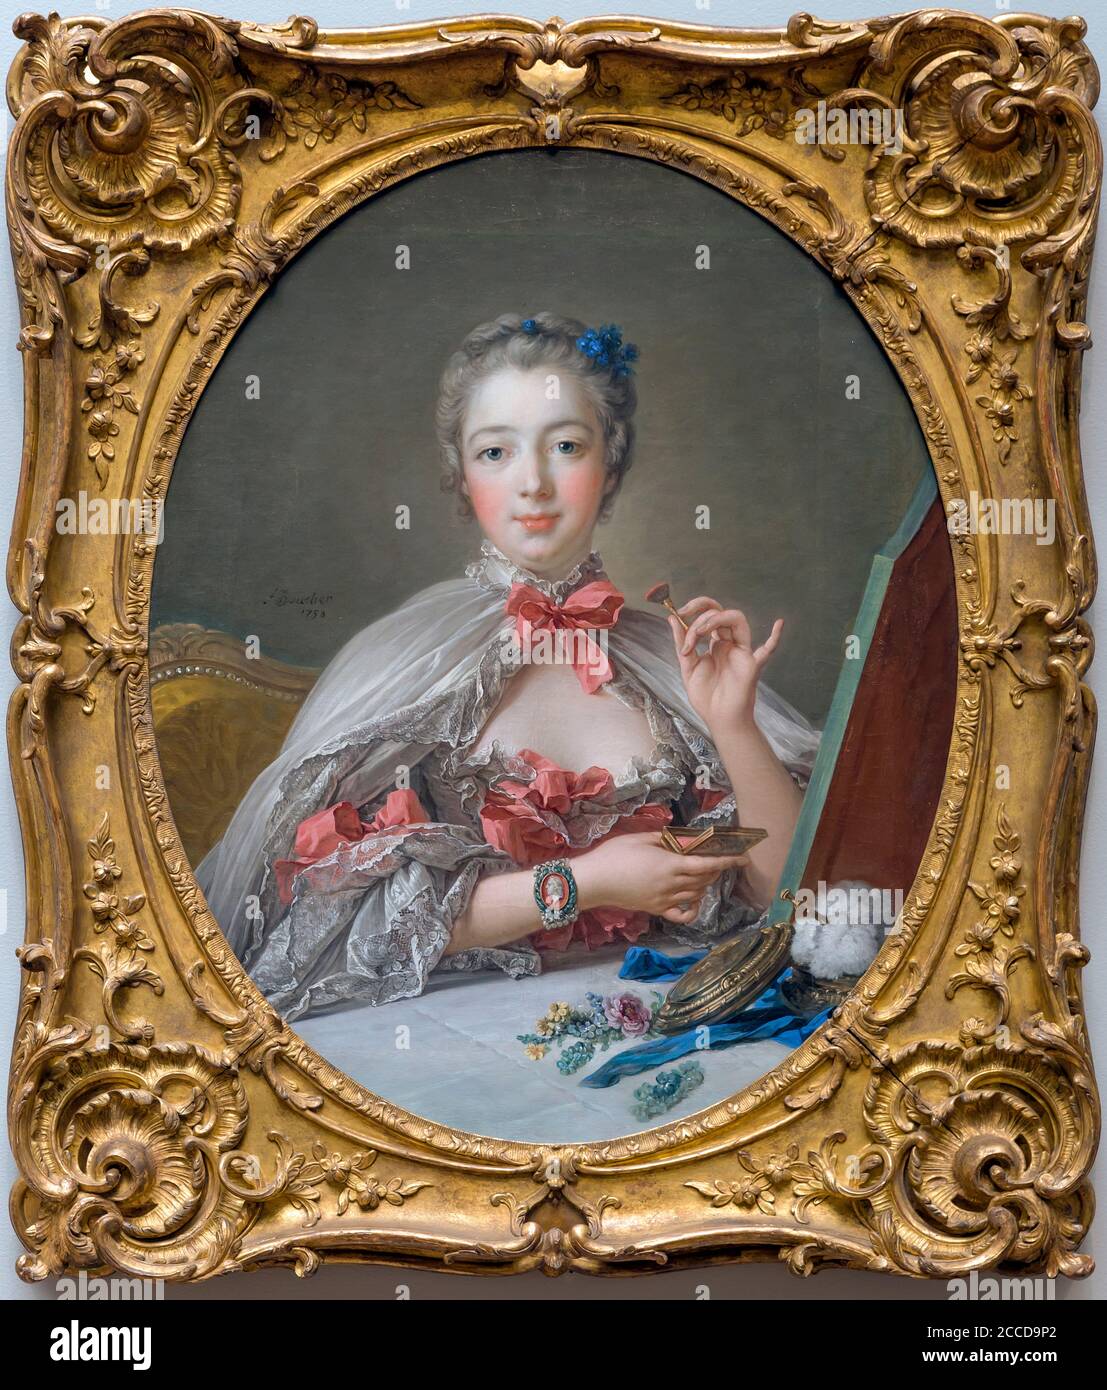 Jean Antoinette Poisson, Marquise de Pompadour, Francois Boucher, 1750 Fogg Museum, Harvard University Art Museums, Cambridge, Massachusetts, USA, Nordamerika Stockfoto